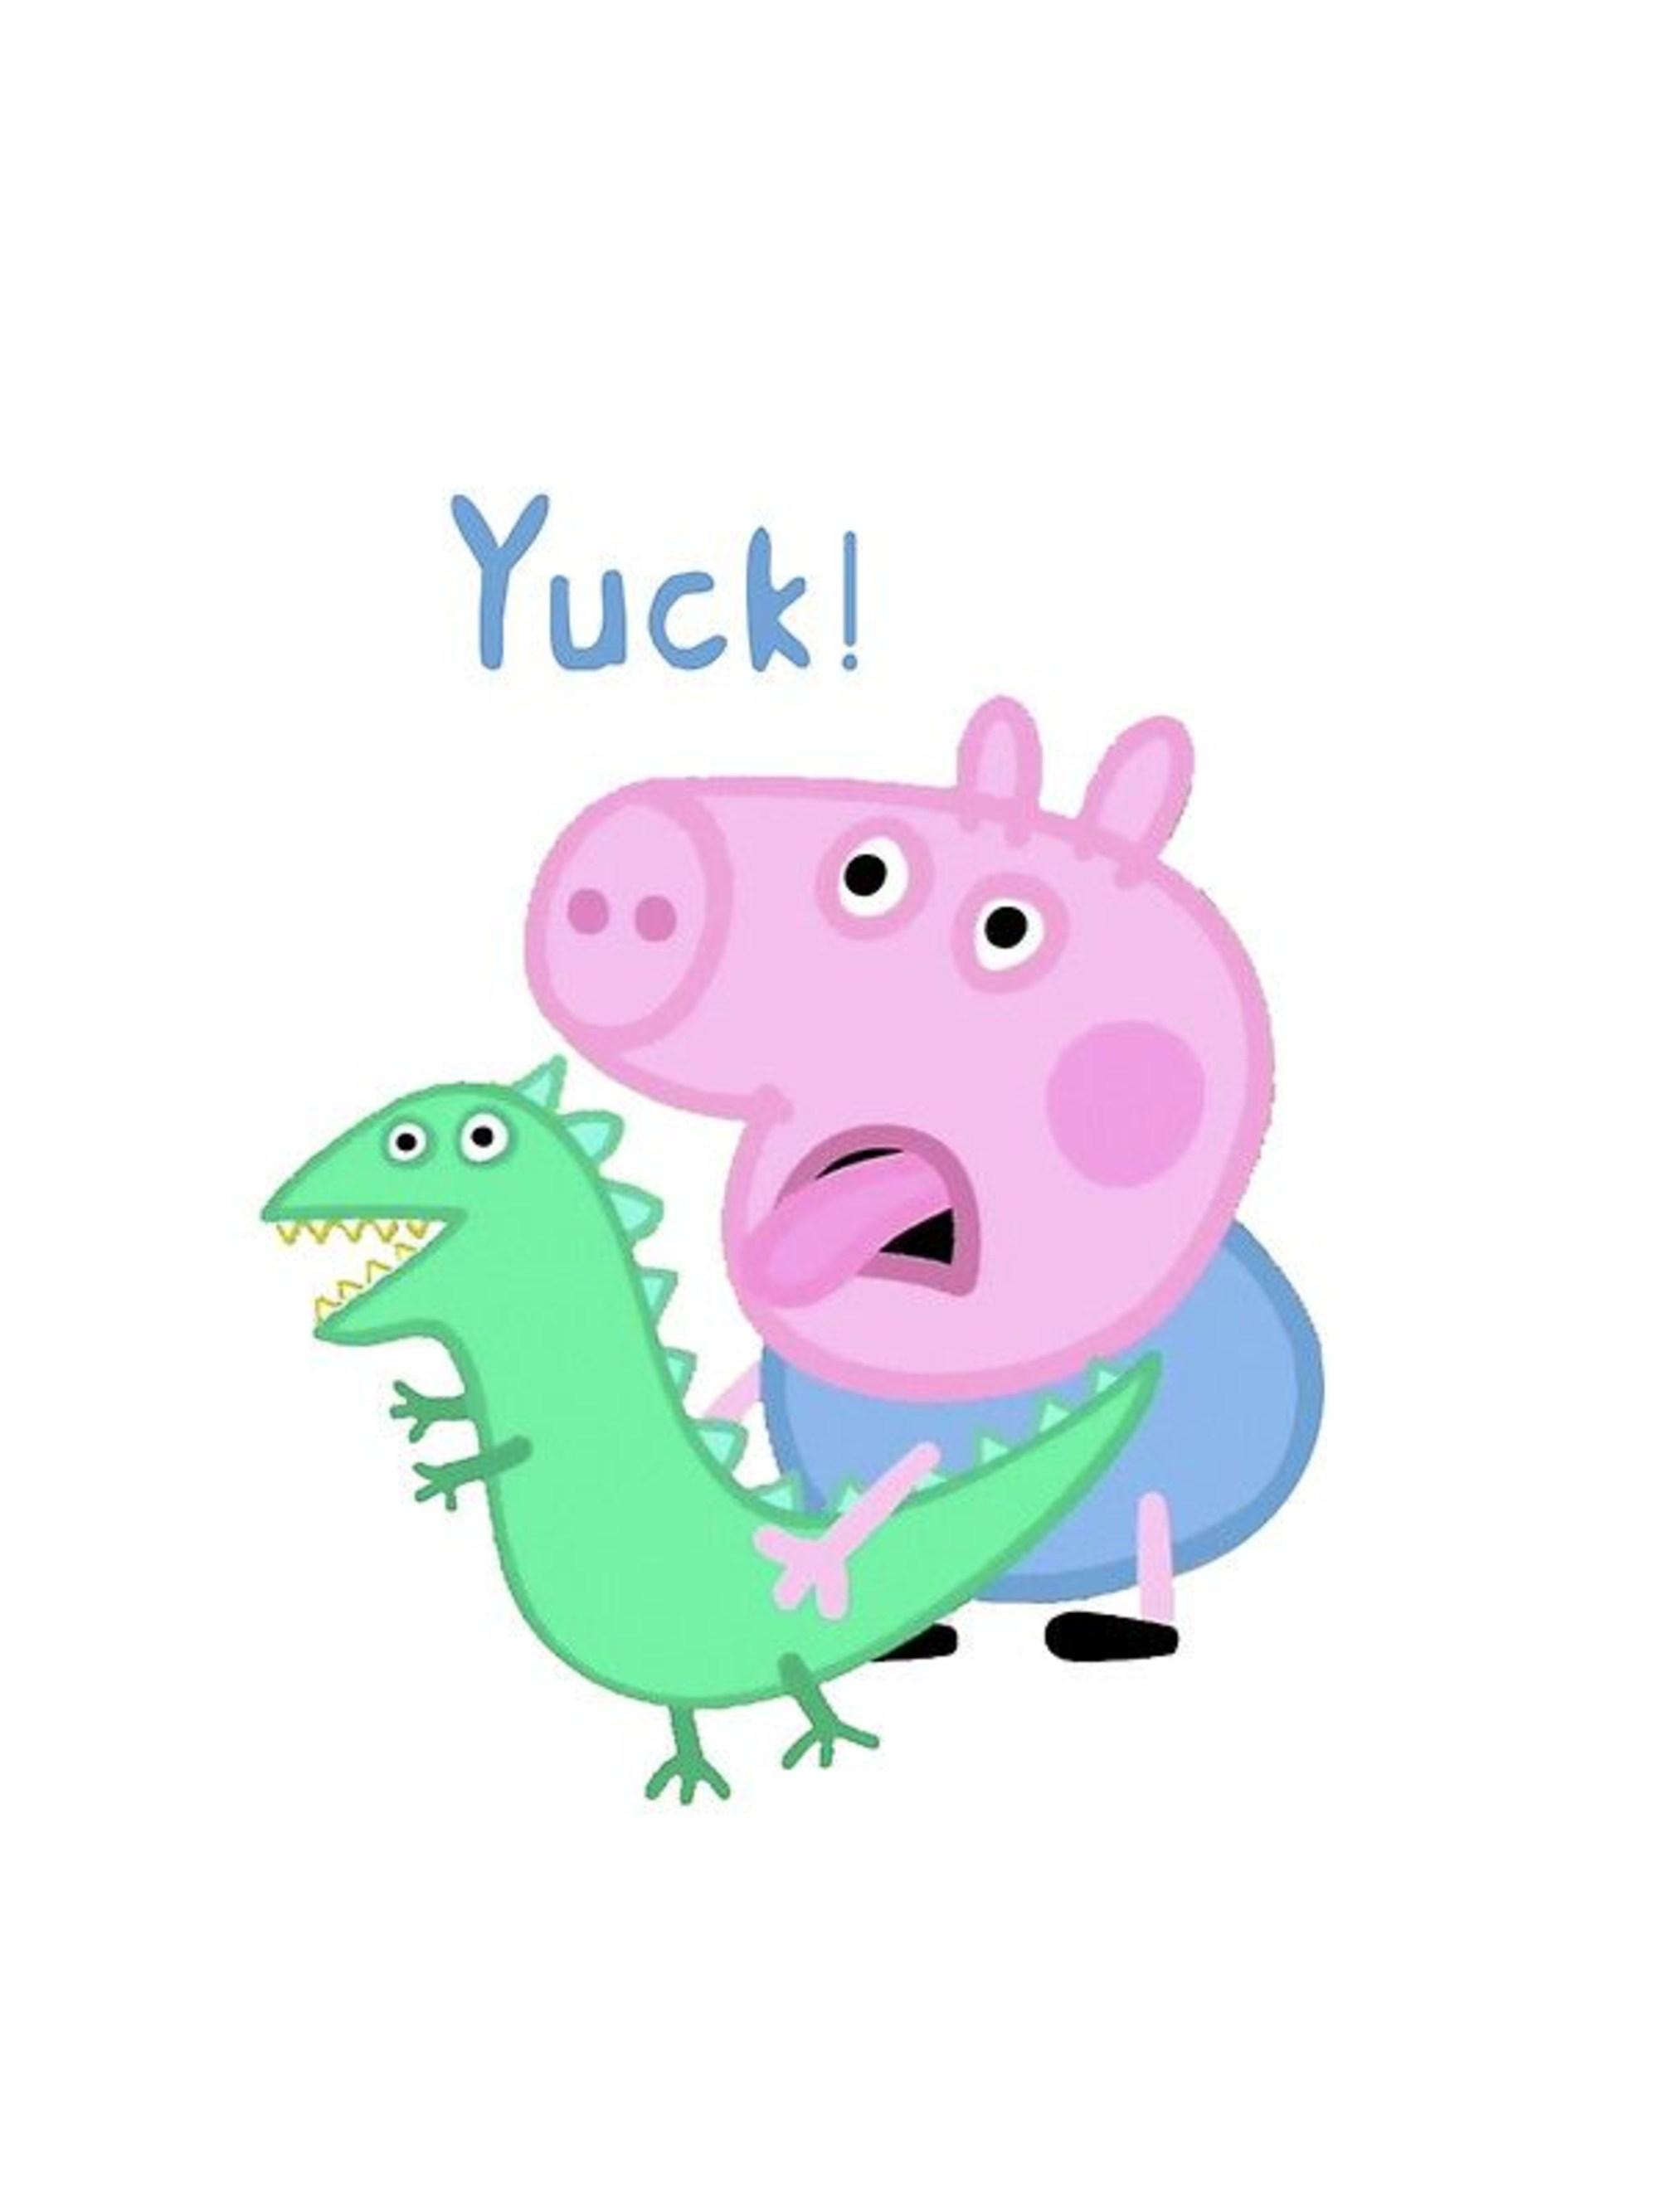 Featured image of post Funny Aesthetic Wallpapers Peppa Pig / Wallpapers en hd para descargar gratis de la serie infantil de dibujos animados peppa pig.